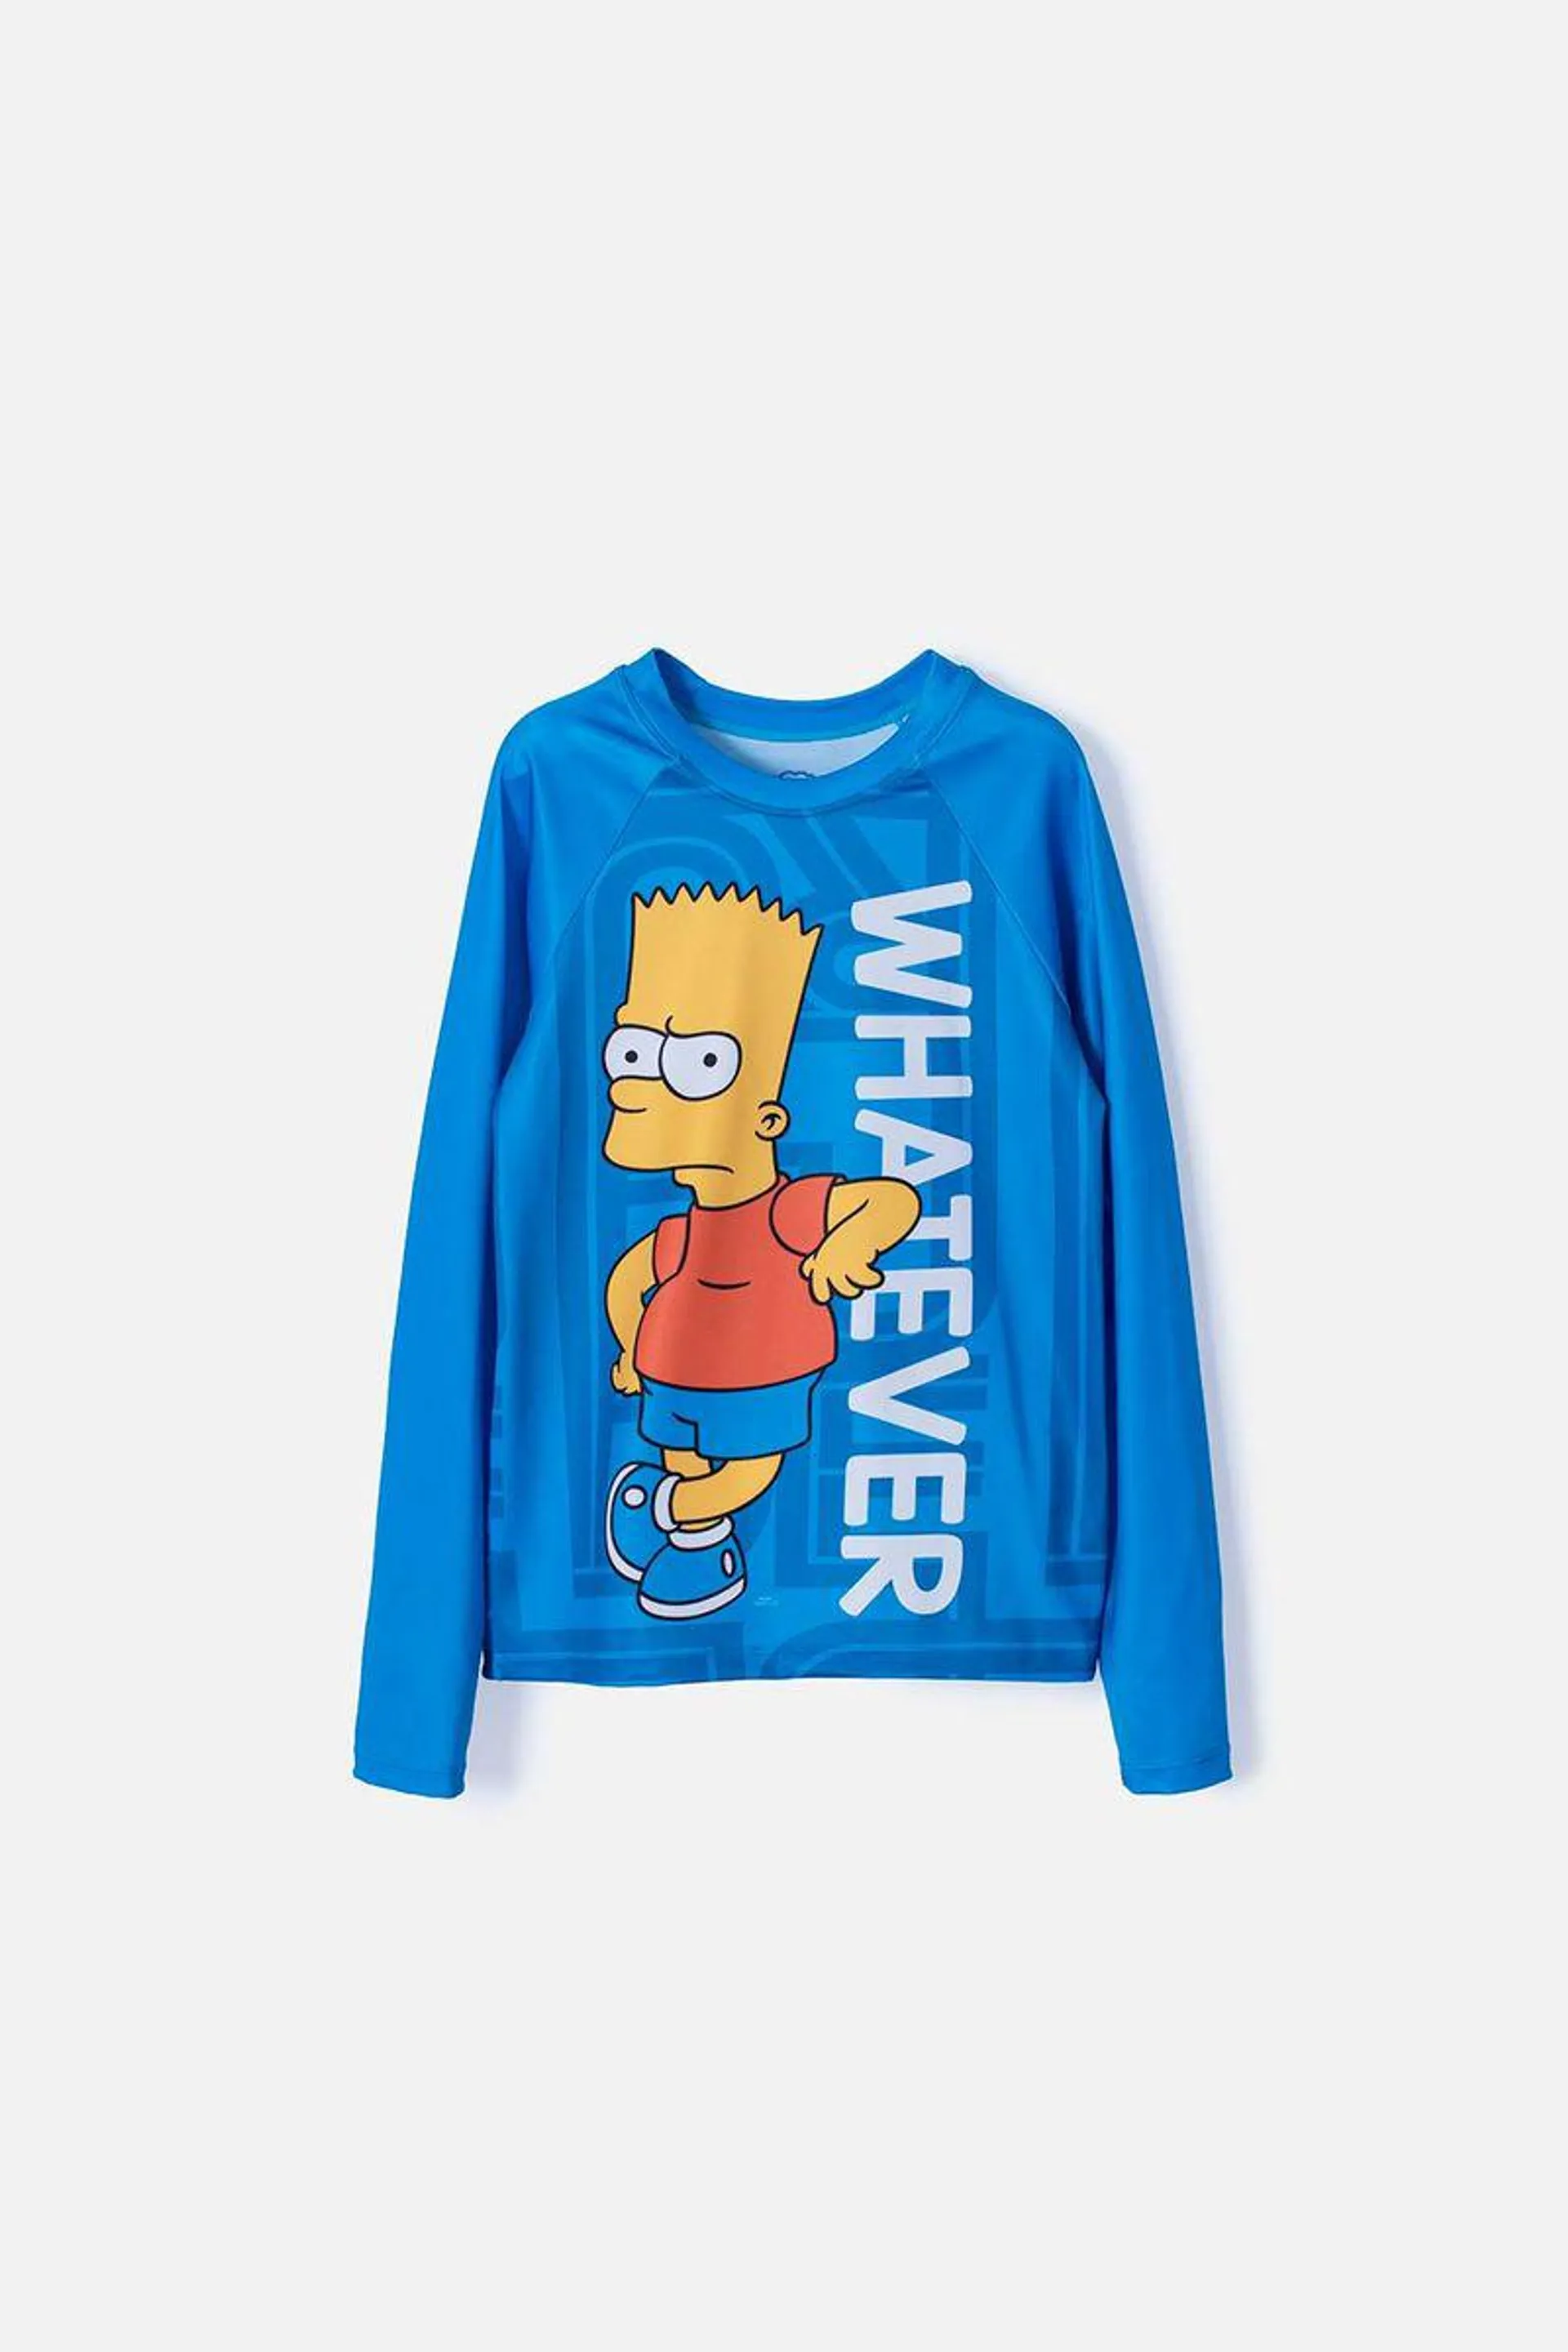 Camiseta de baño Bart Simpson azul manga larga para niño